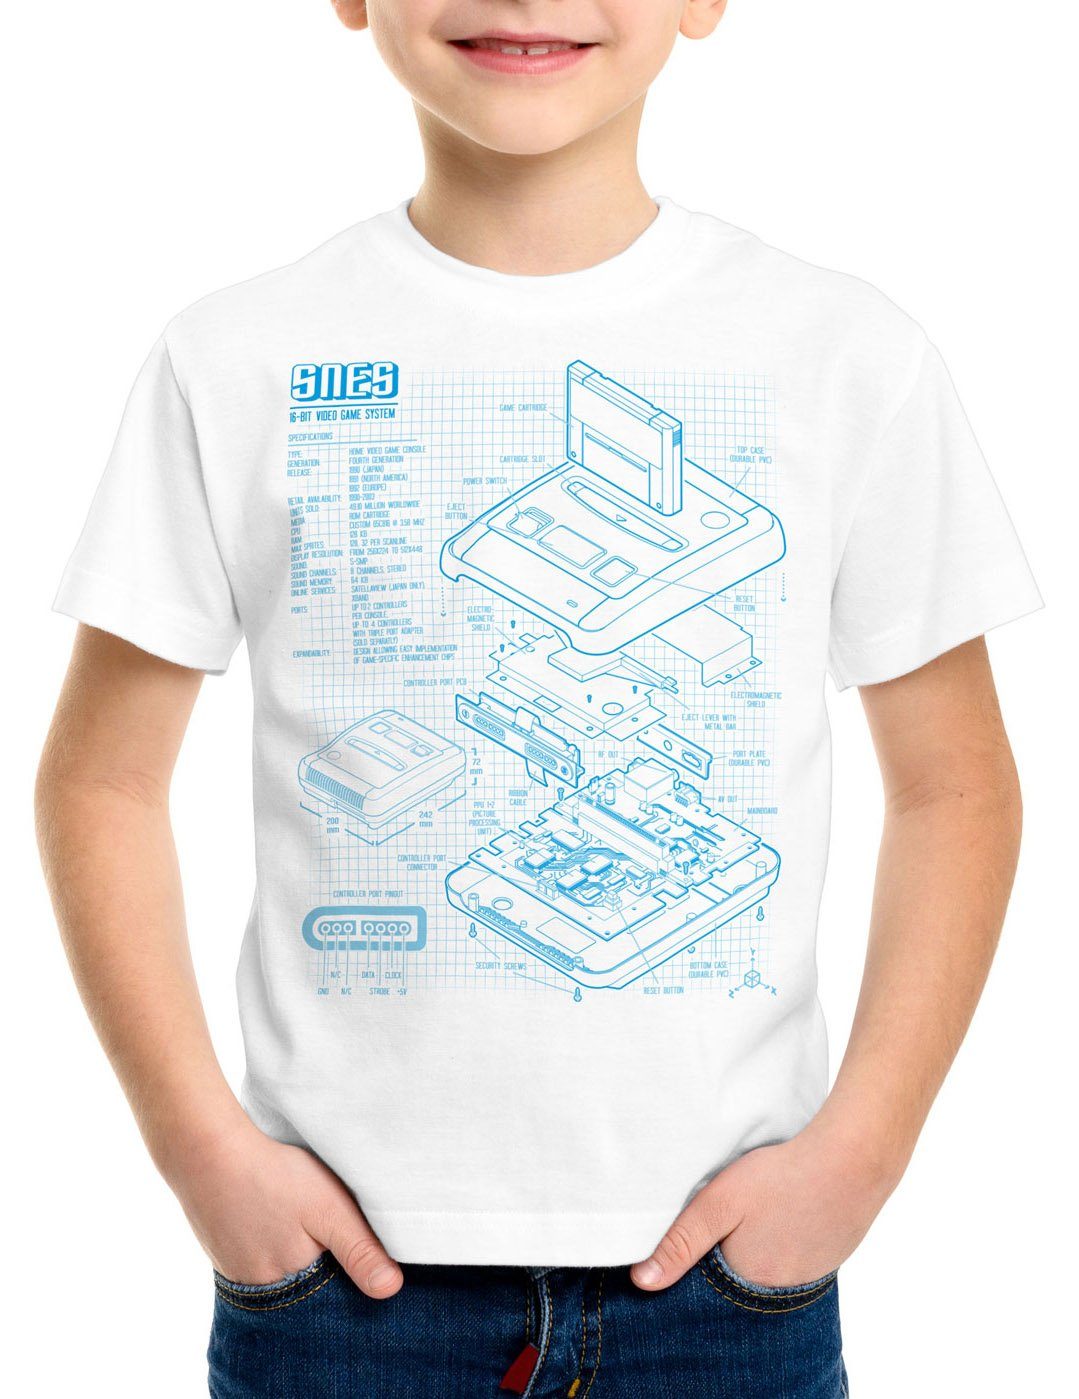 style3 Print-Shirt Kinder T-Shirt SNES Blaupause 16-Bit Videospiel weiß